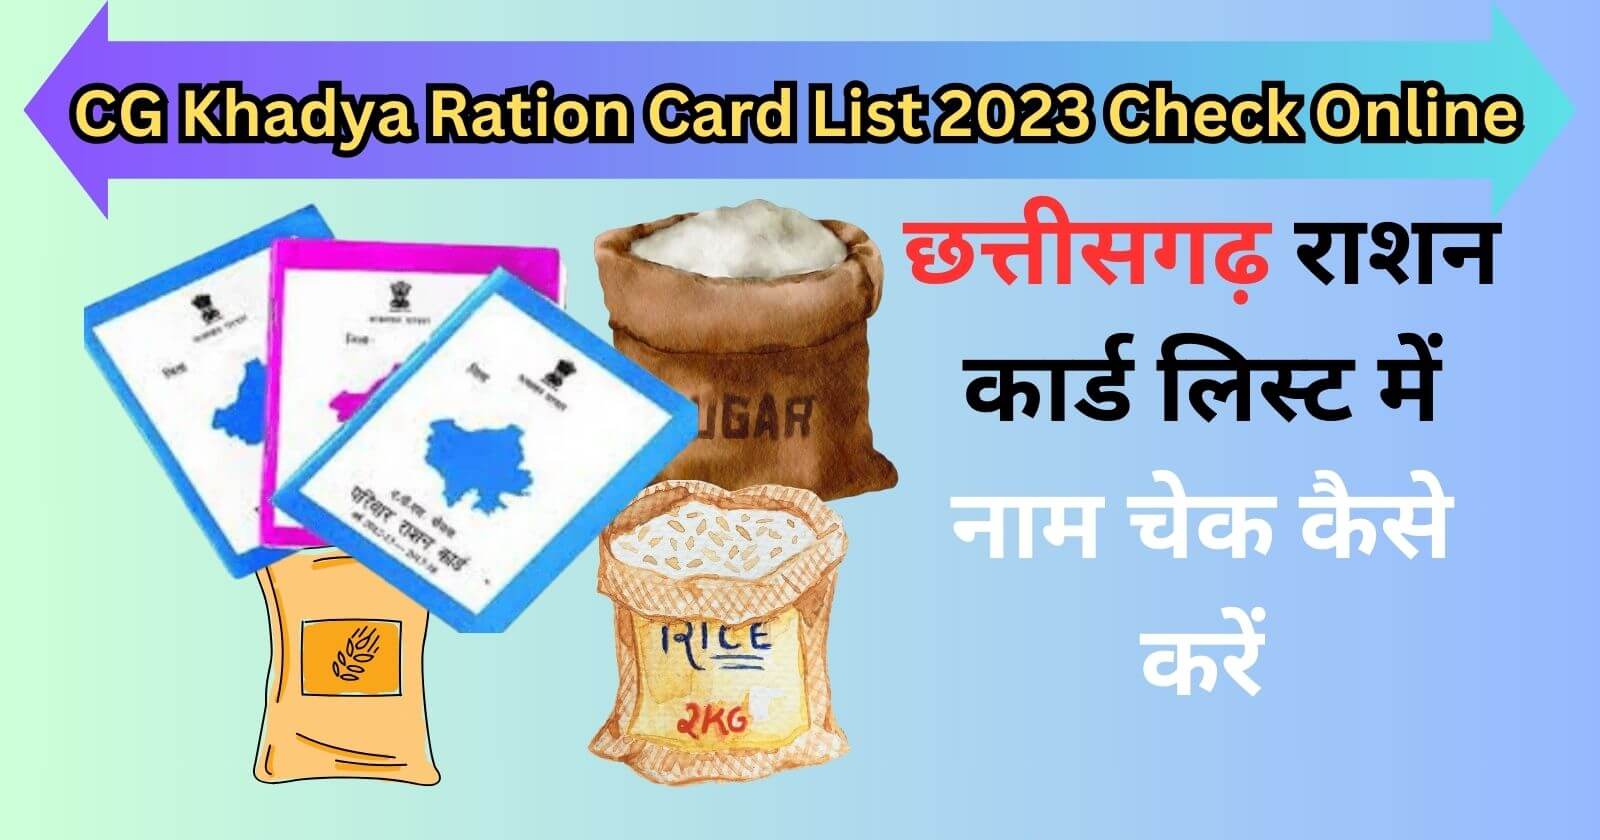 CG Khadya Ration Card List 2023 Check Online